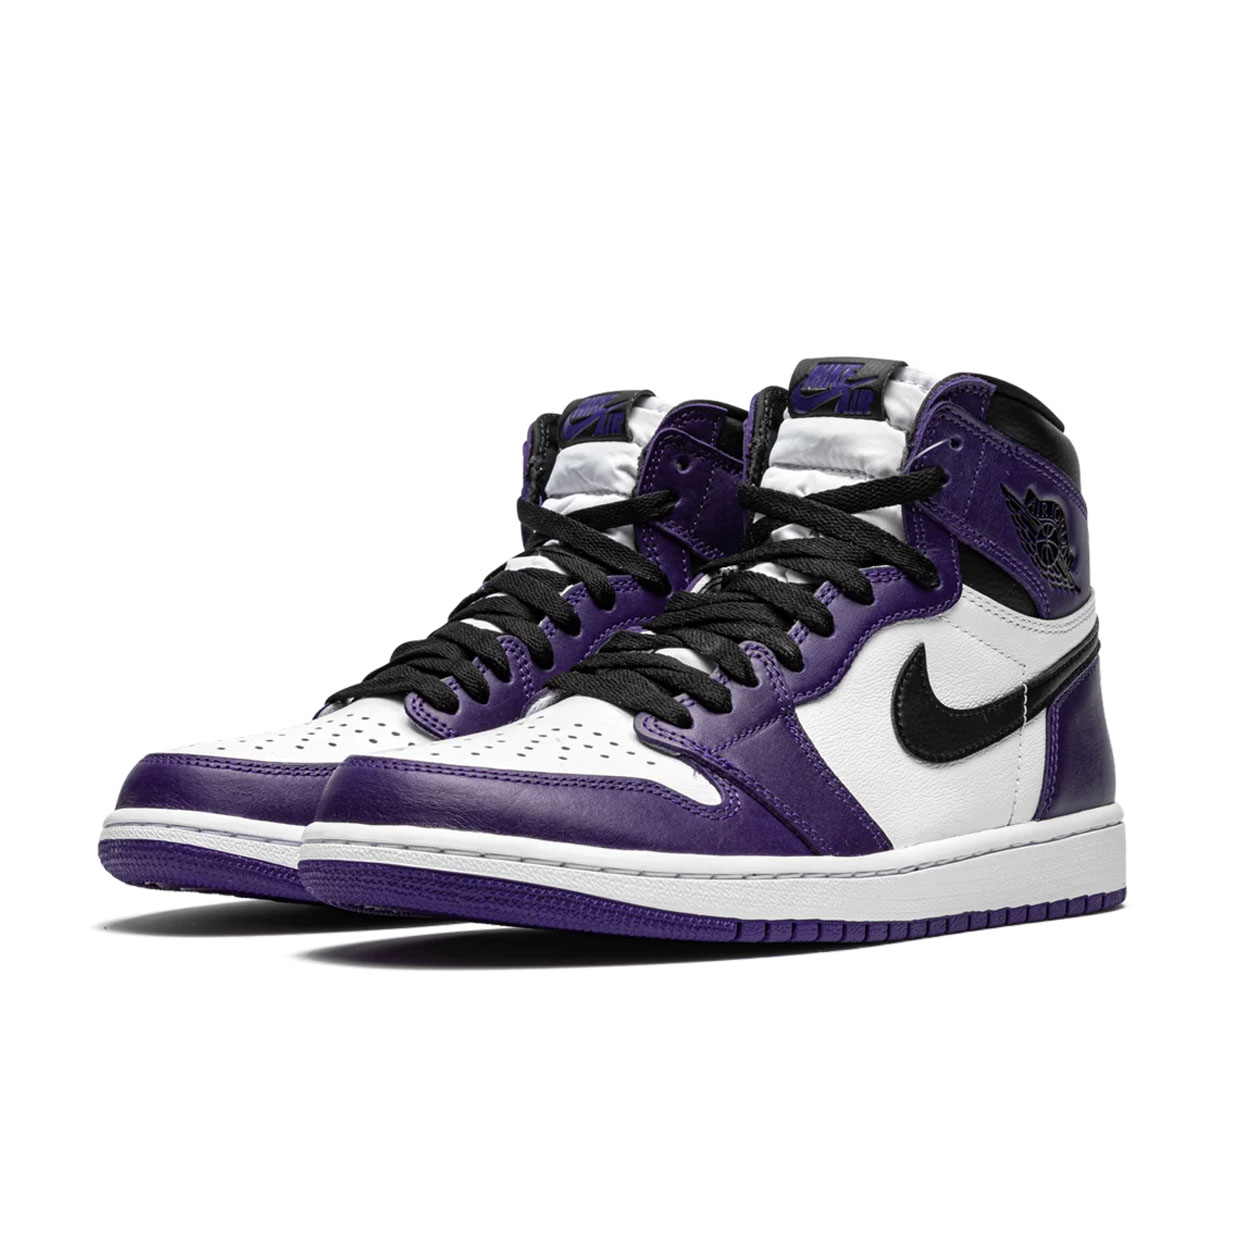 jordan one court purple 2.0